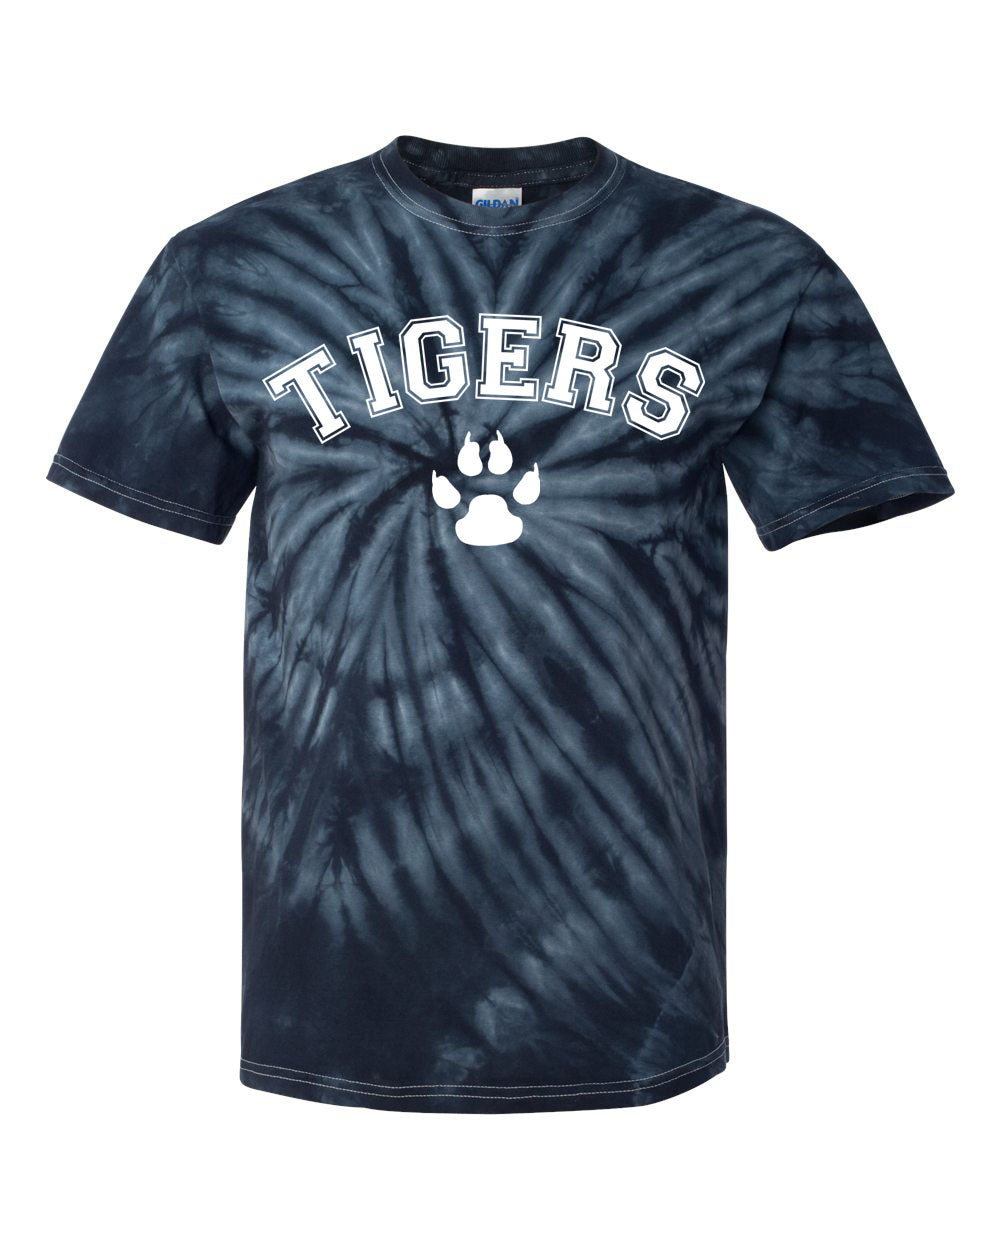 Tigers Design 3 Tie Dye t-shirt